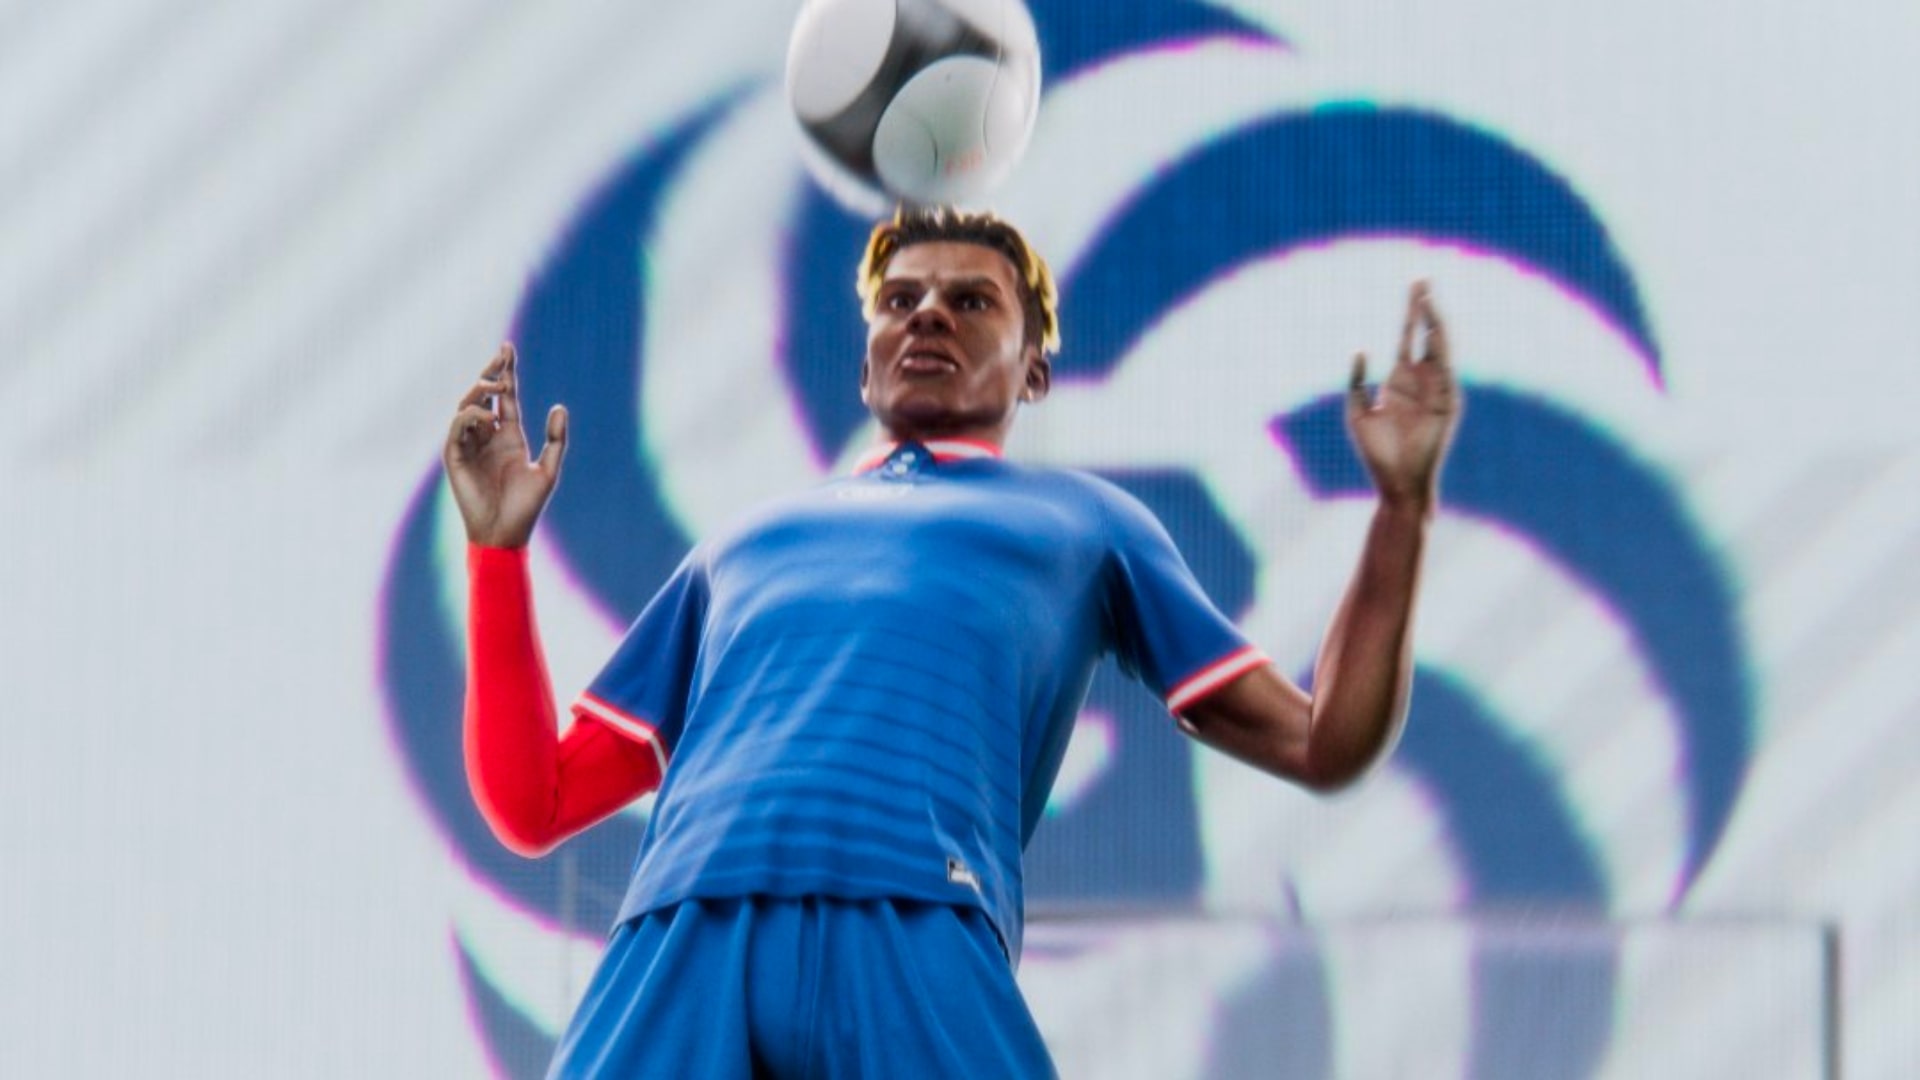 Soccer Game Developer Goals Raises $20M Series A for Esports-Ready Title